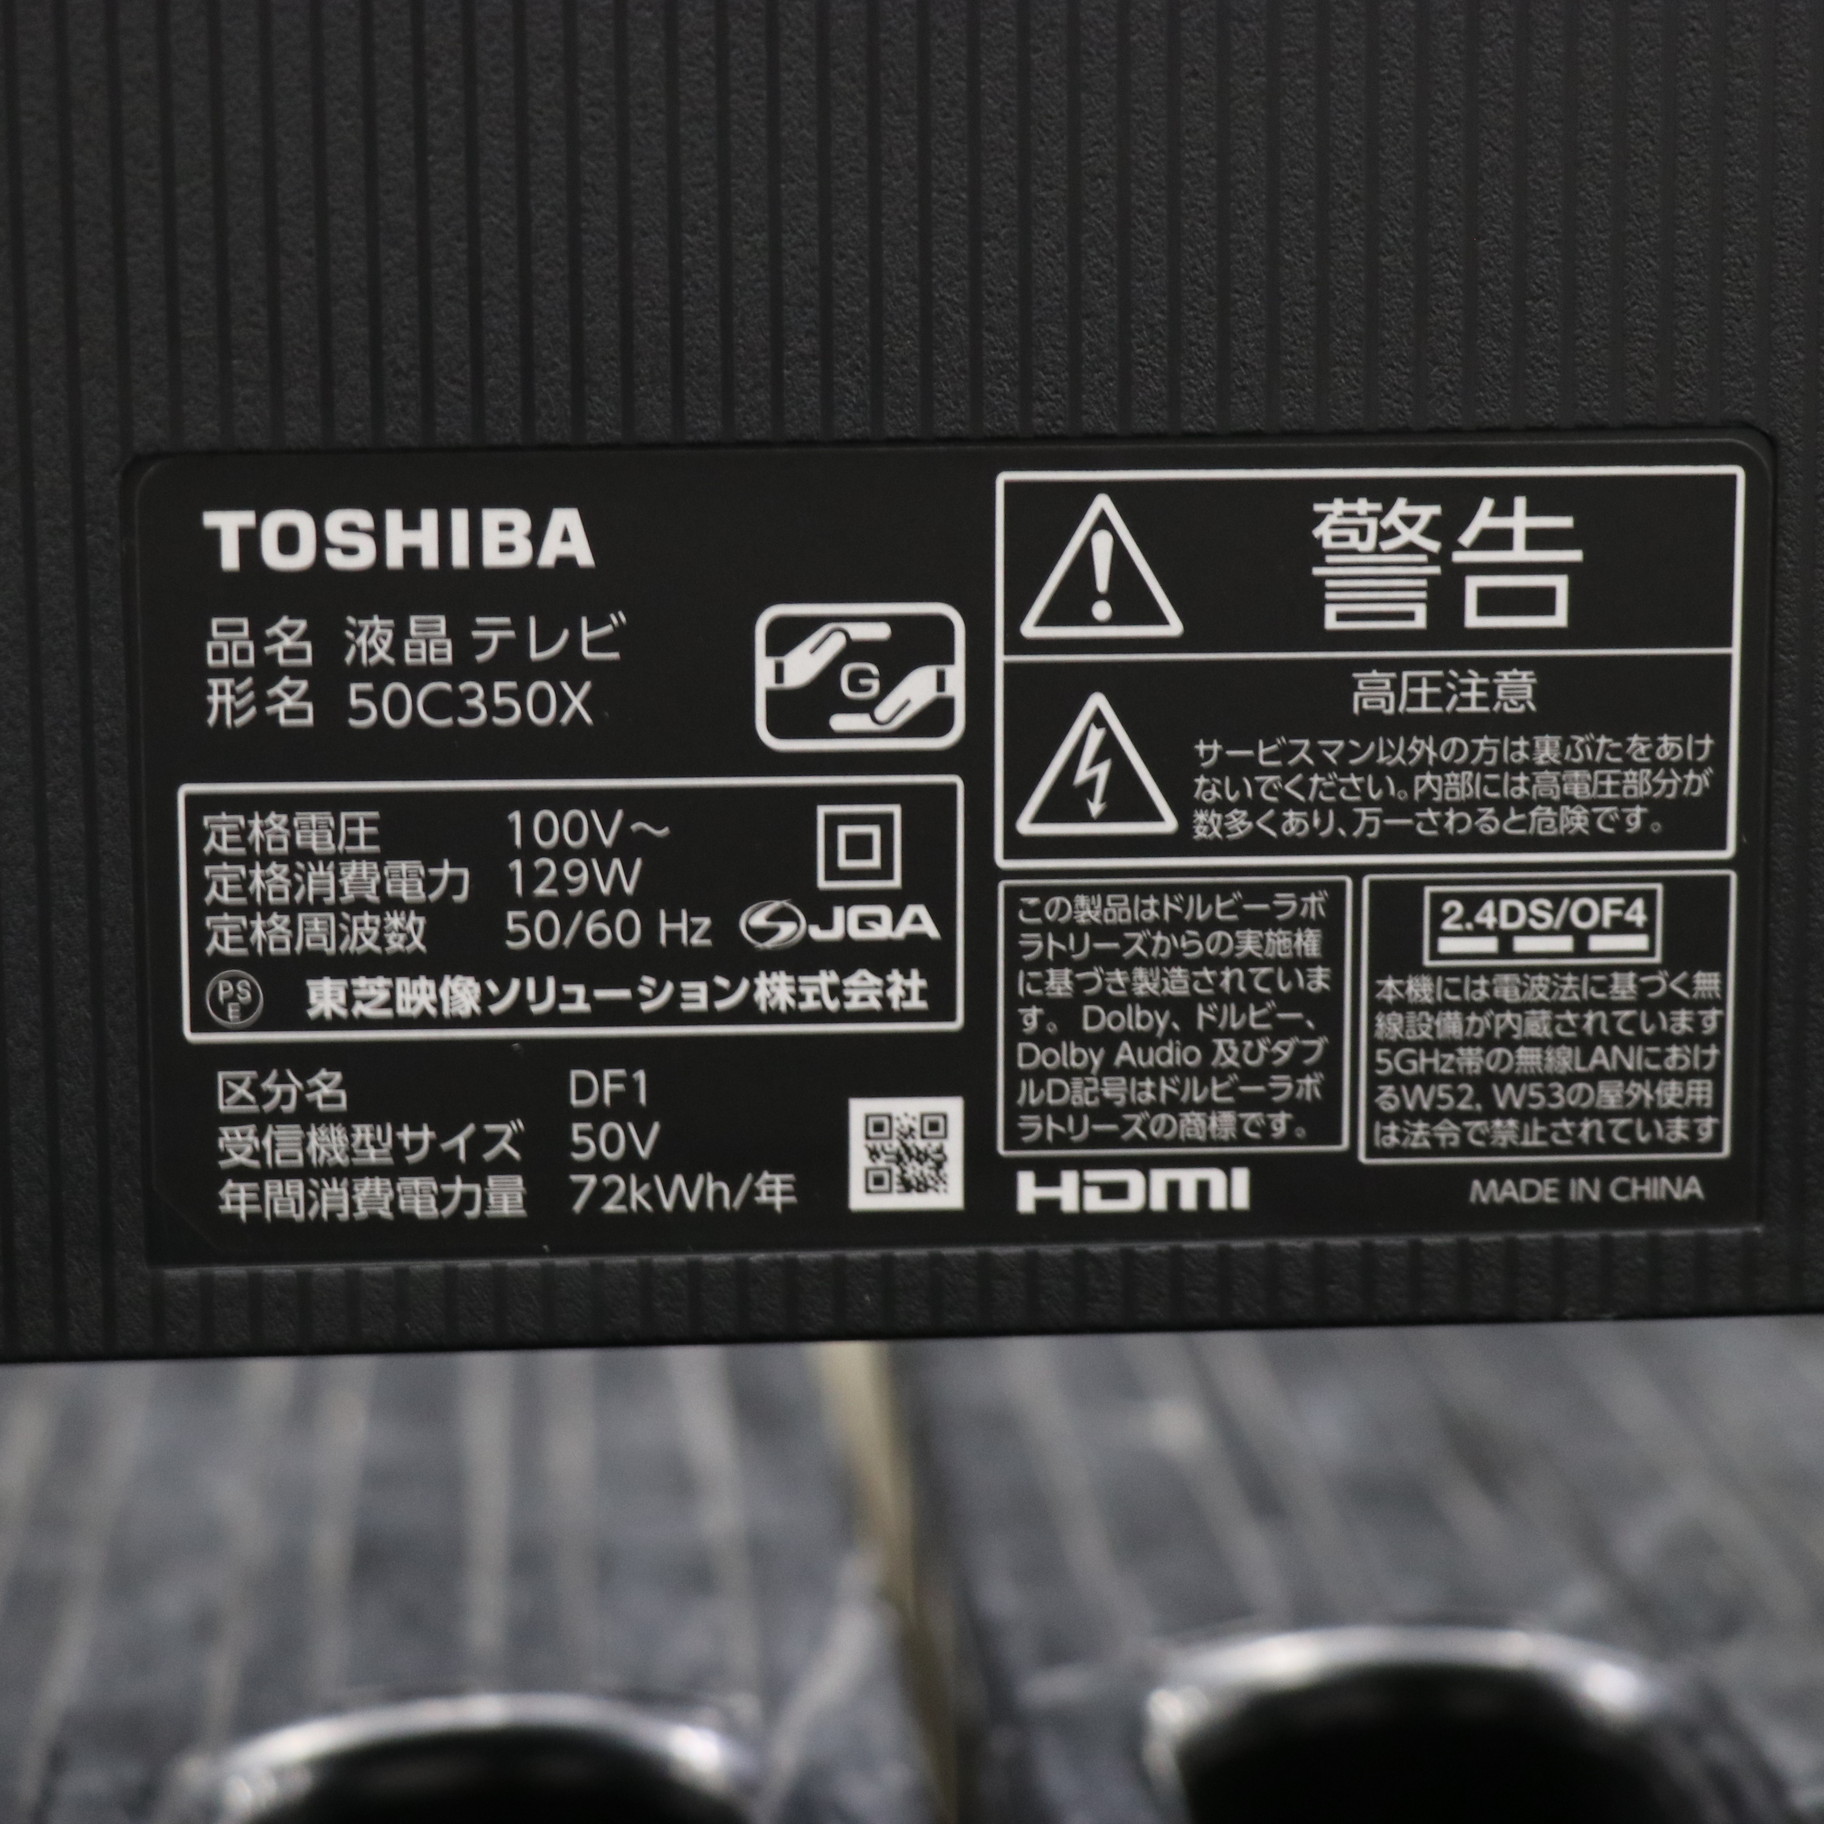 TOSHIBA 50C350X BLACK - テレビ